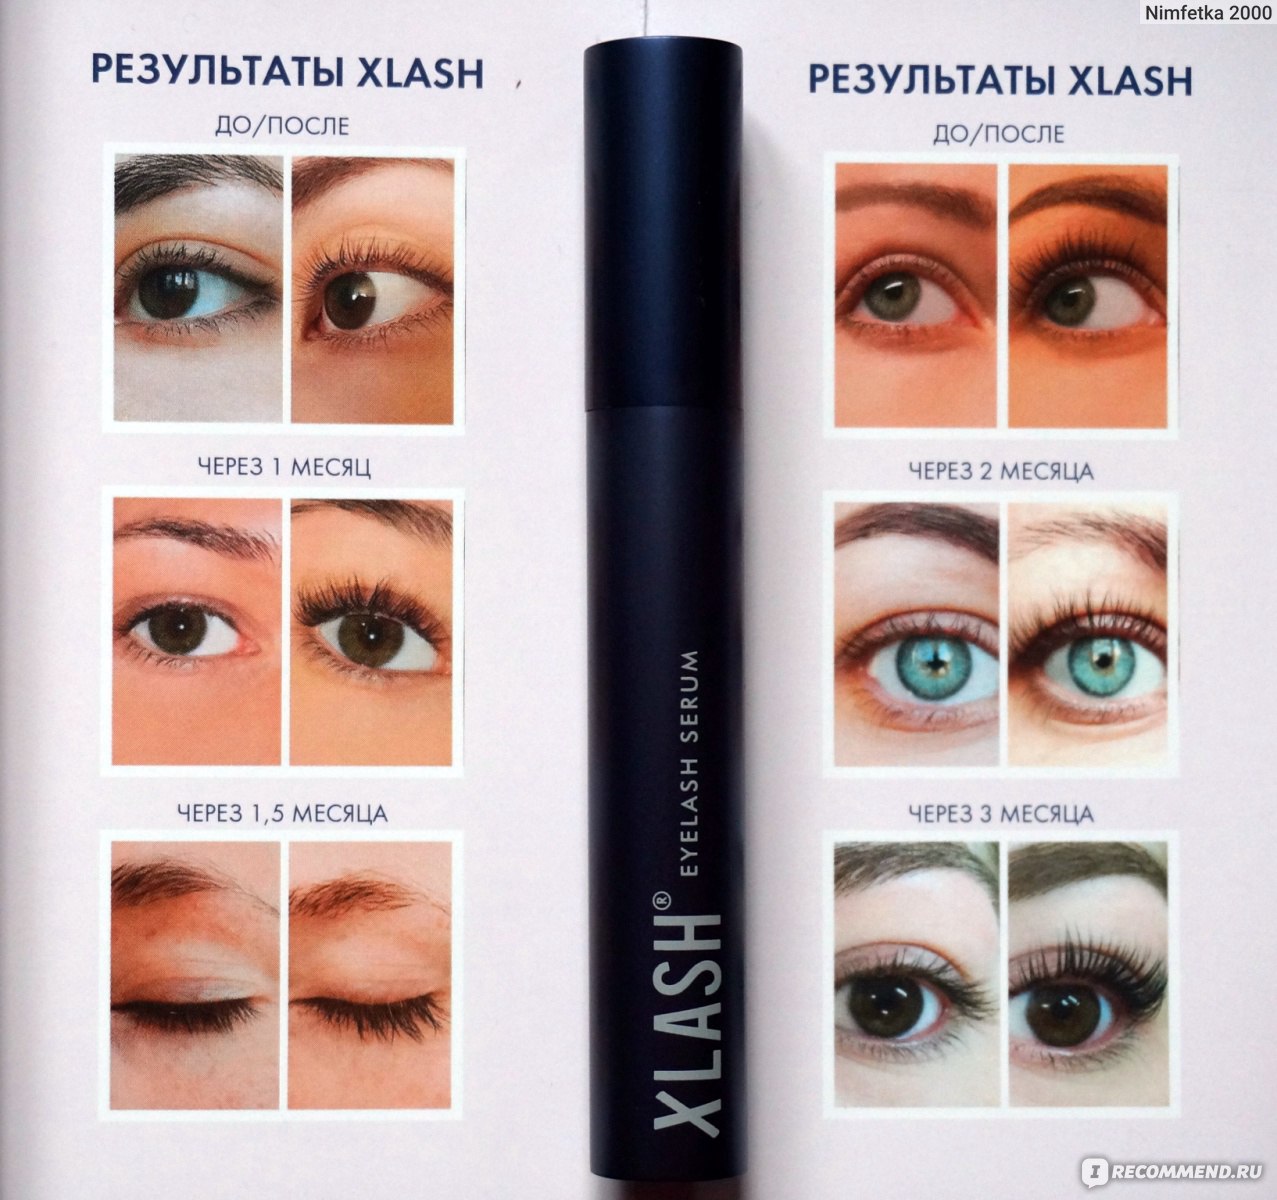 Xlash eyelash